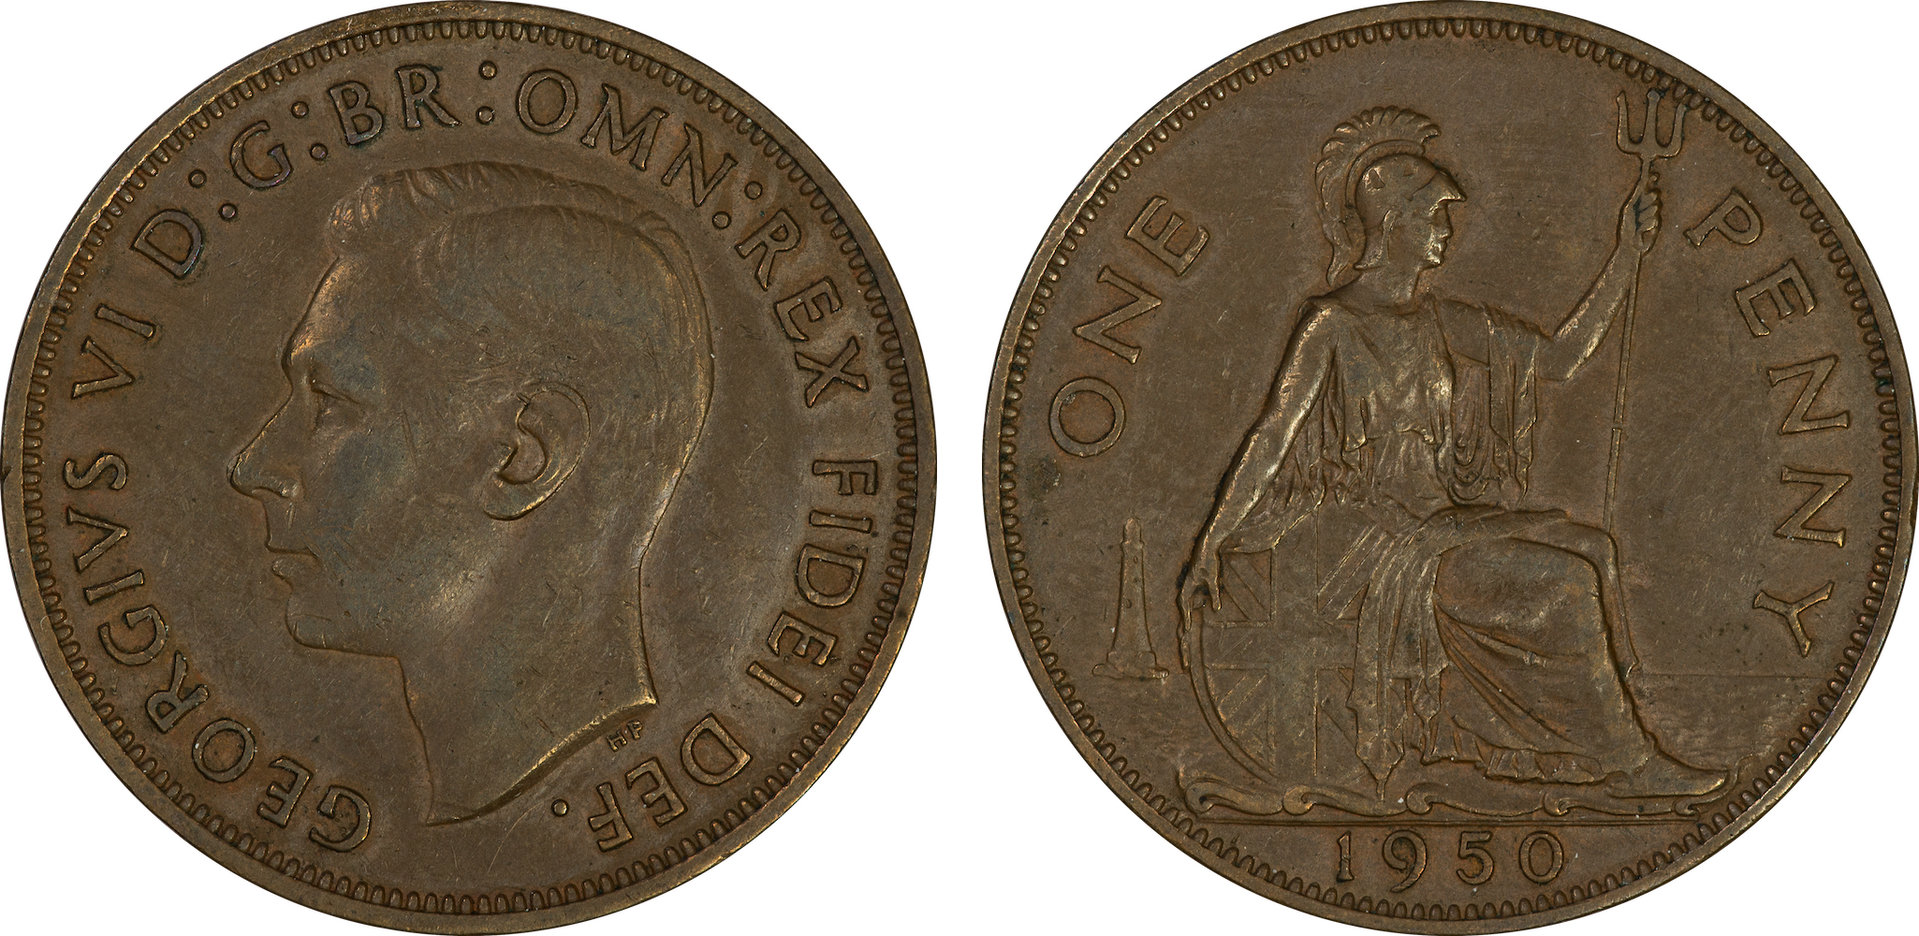 Great Britain - 1950 Penny.jpg